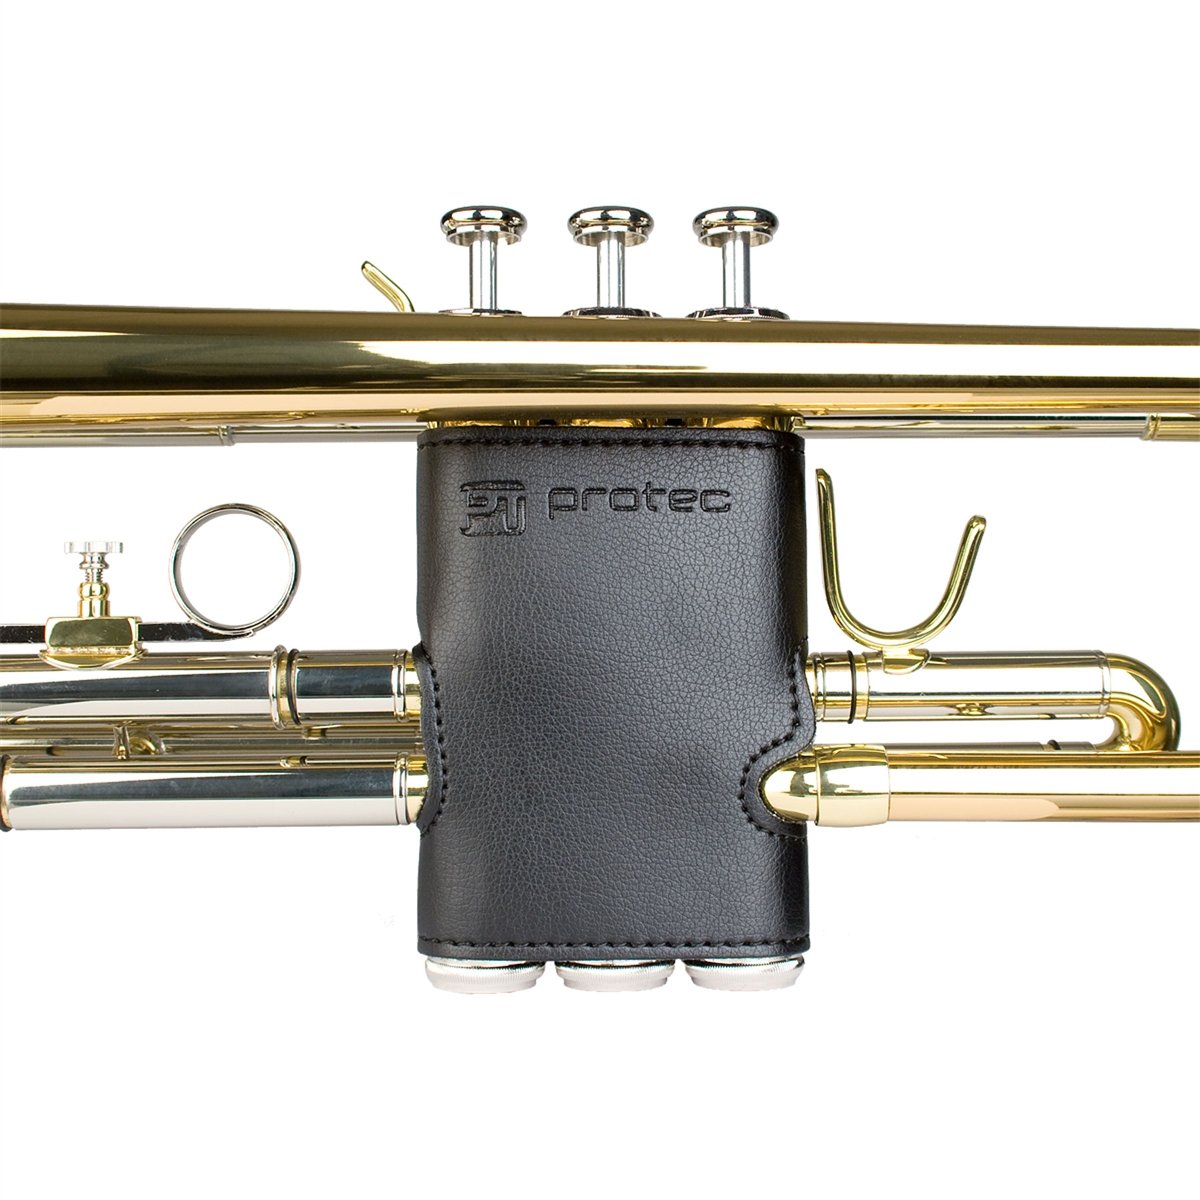 Protec - L226SP 6-Point Leather Valve Guard for Trumpet - Music Elements